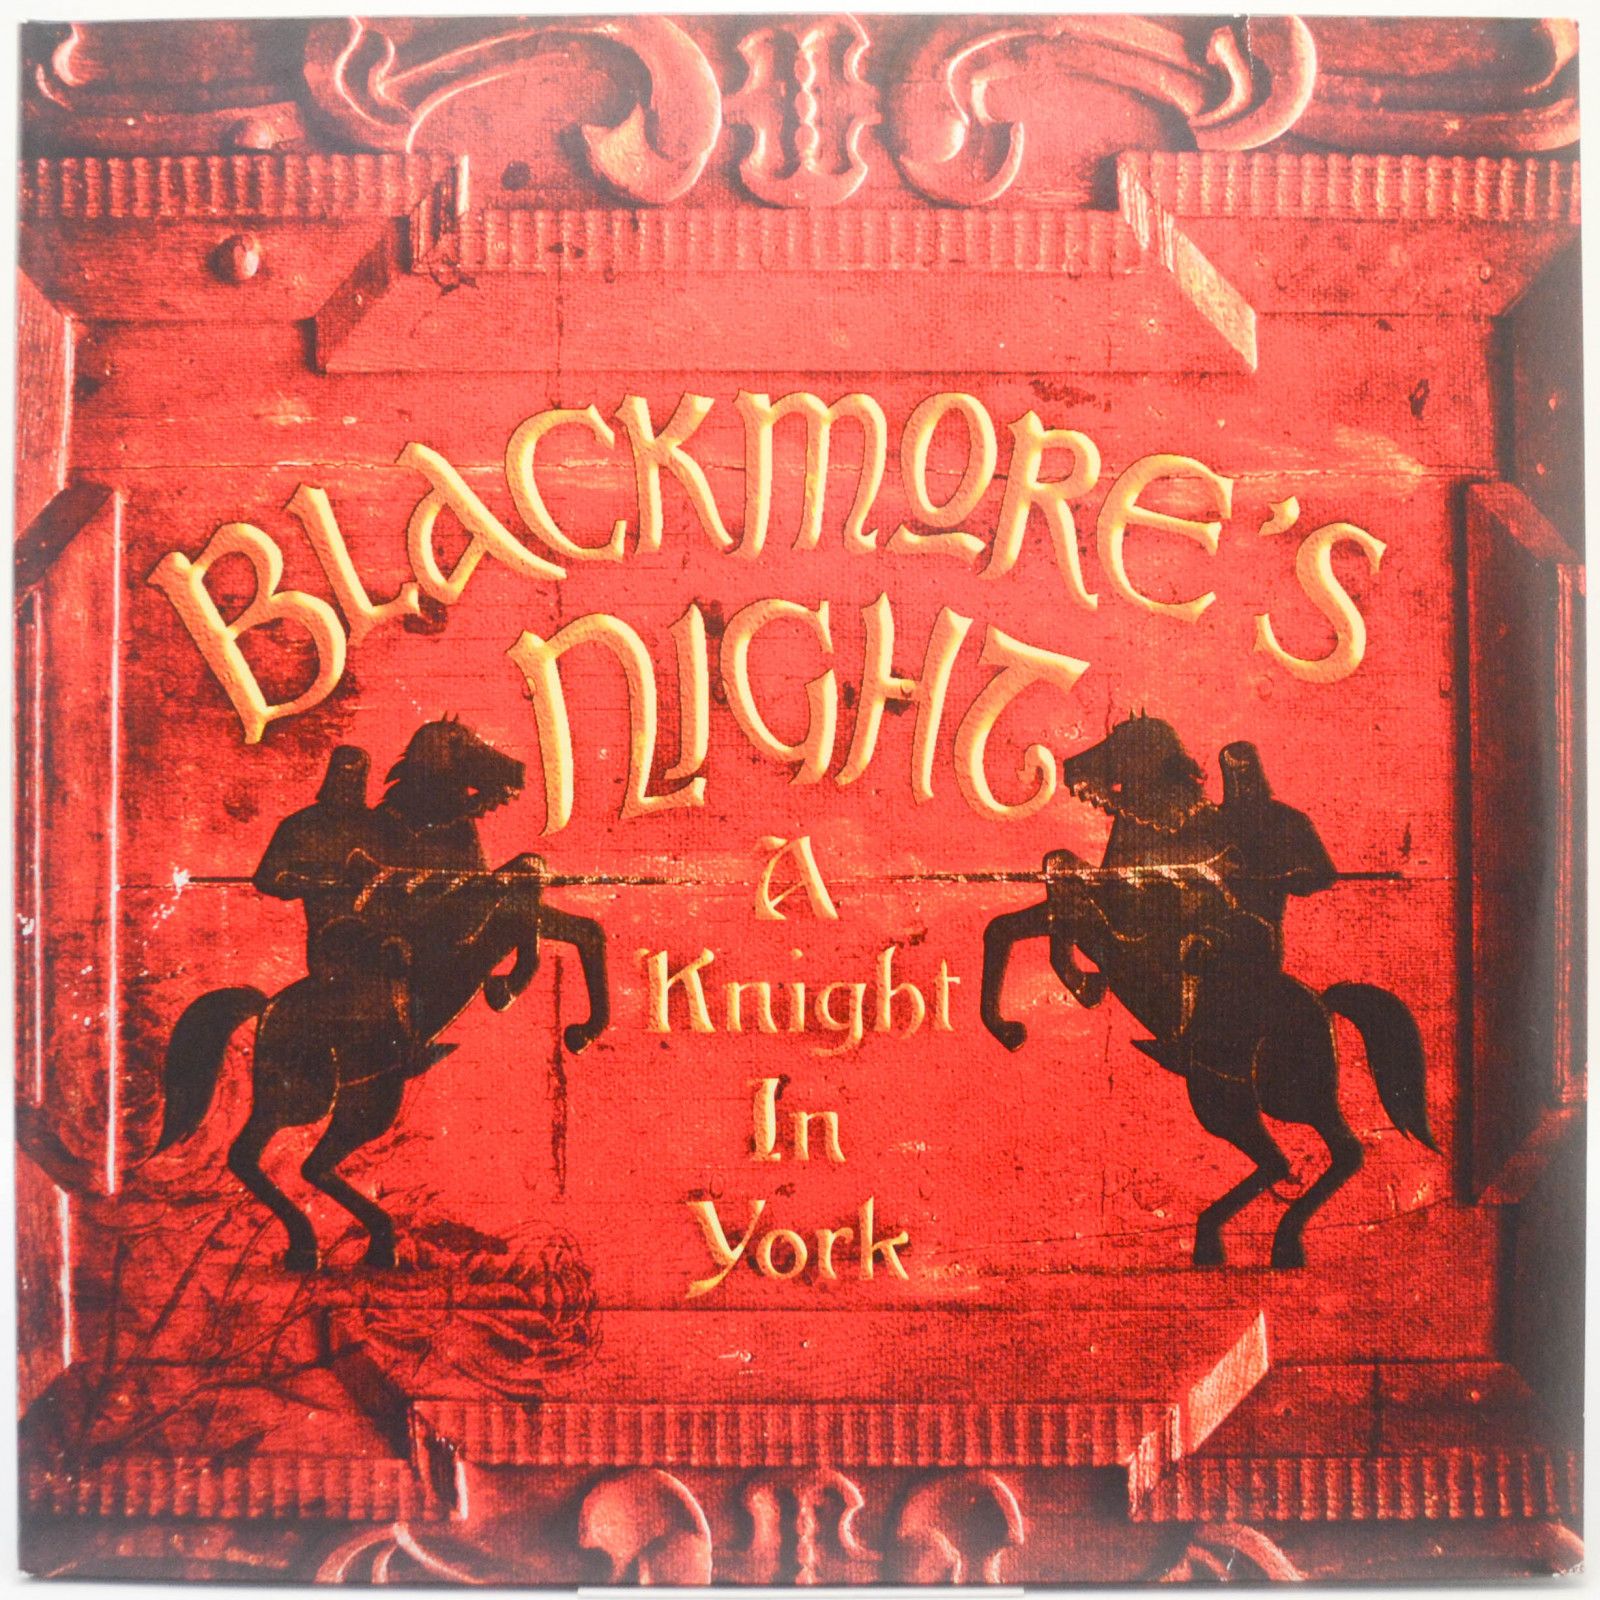 Blackmores night diamonds and rust фото 58